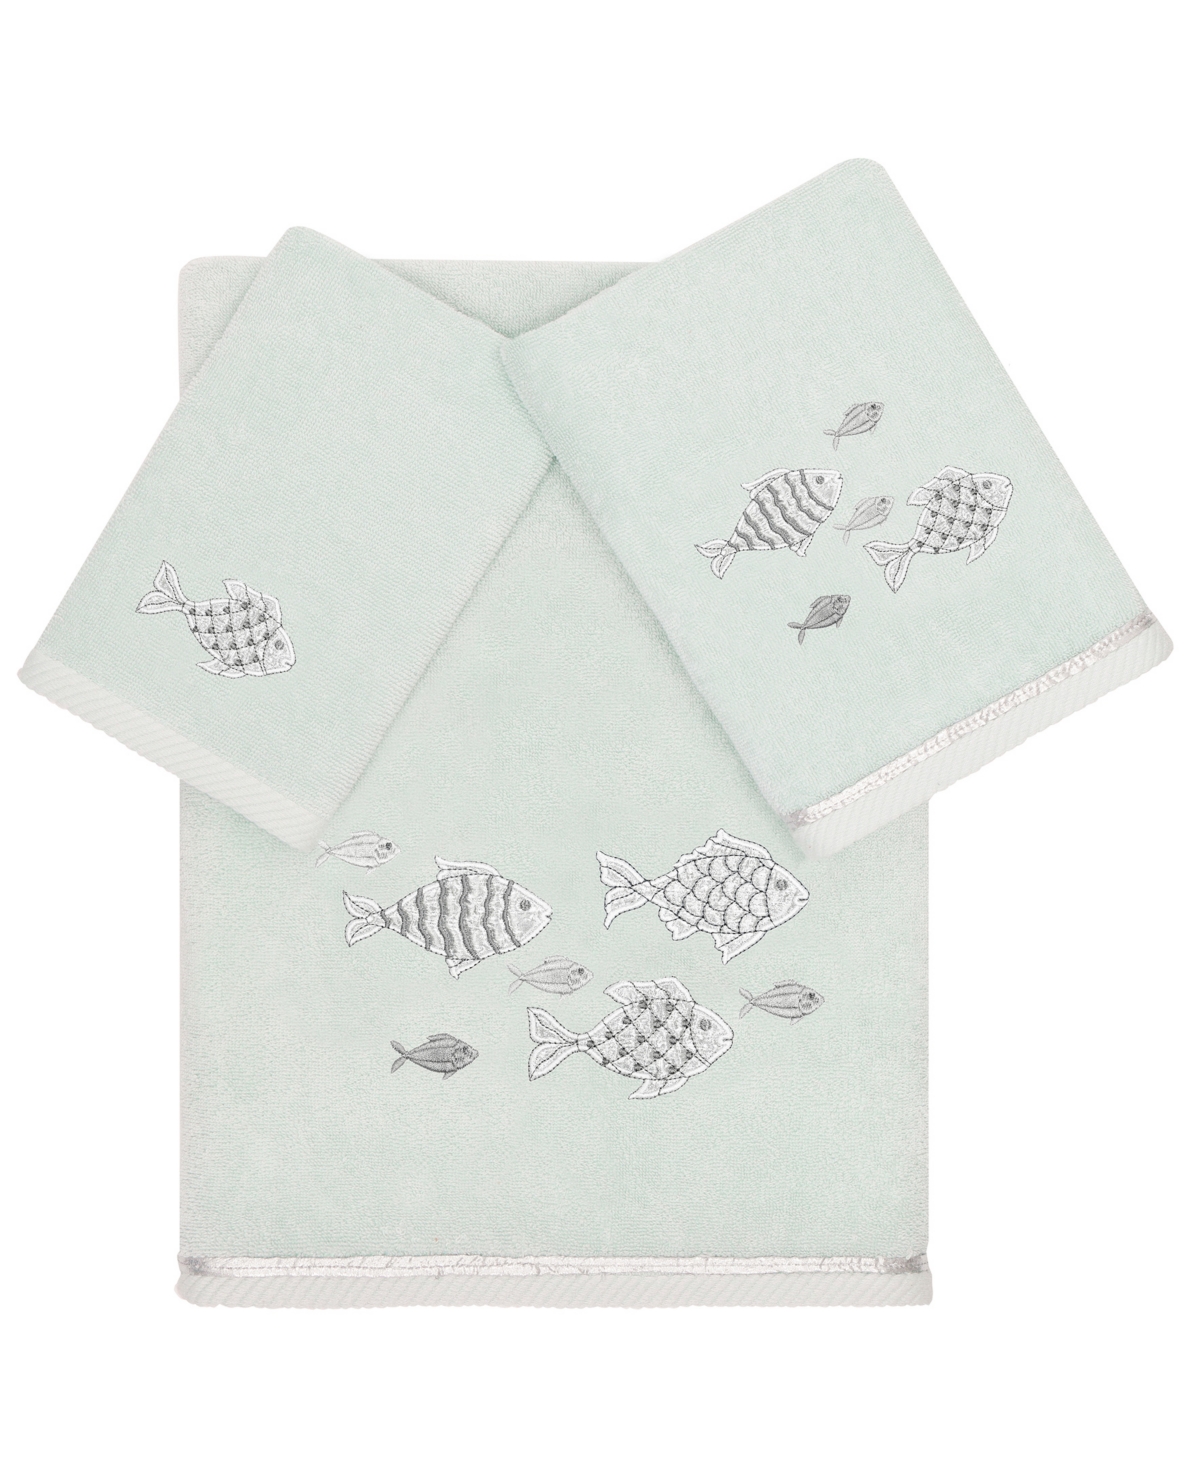 Linum Home Textiles Turkish Cotton Figi Embellished Towel Set, 3 Piece Bedding In Aqua